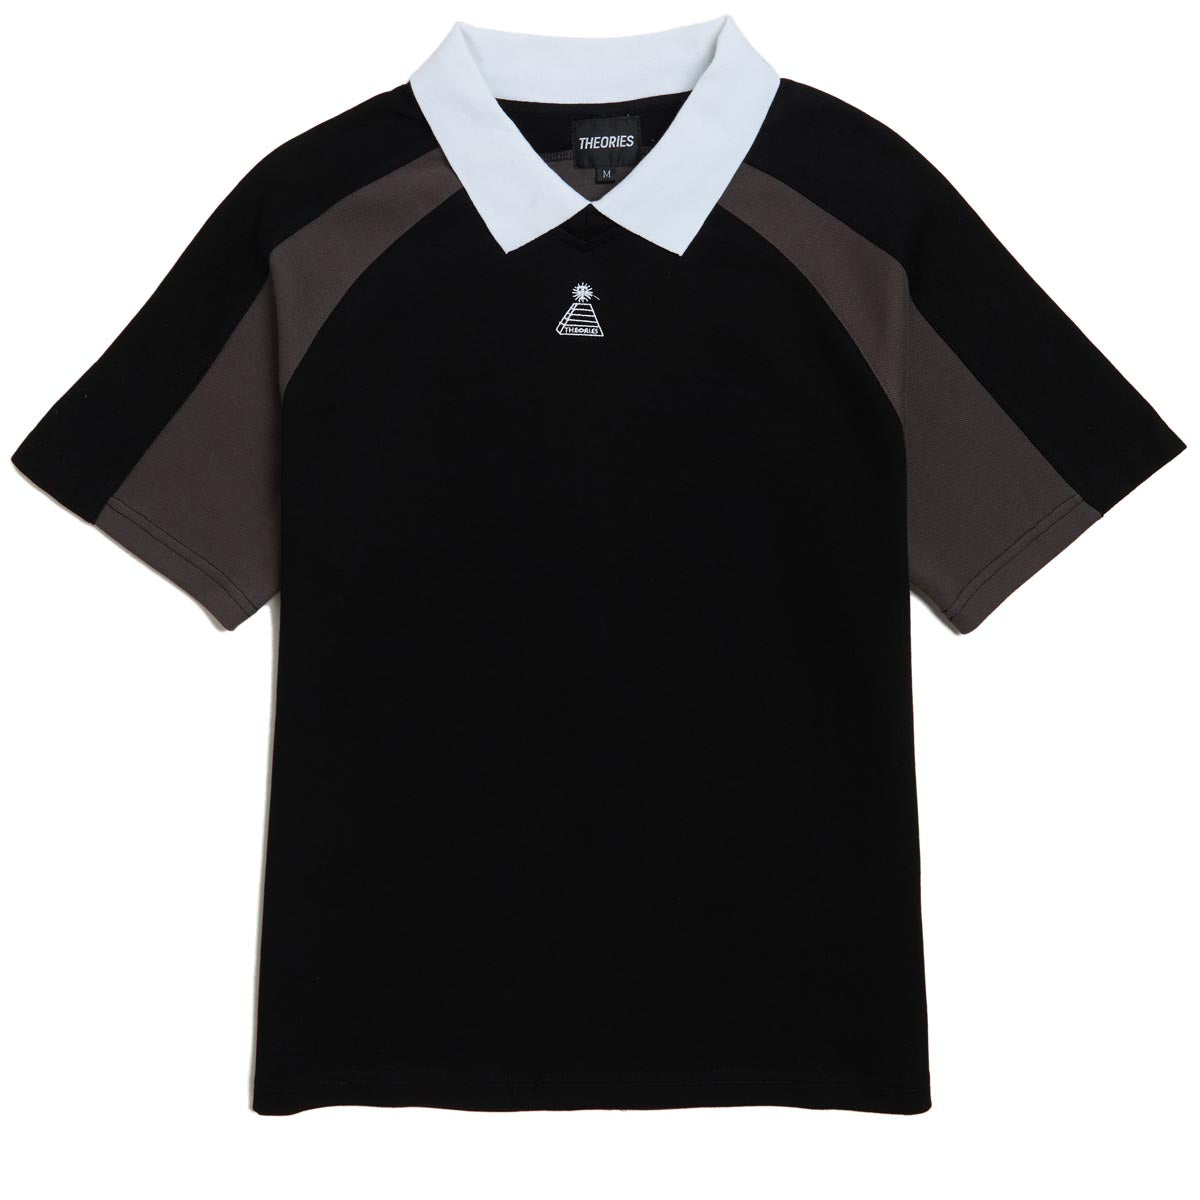 Theories Midfield Pique Polo Shirt - Black/Grey image 1